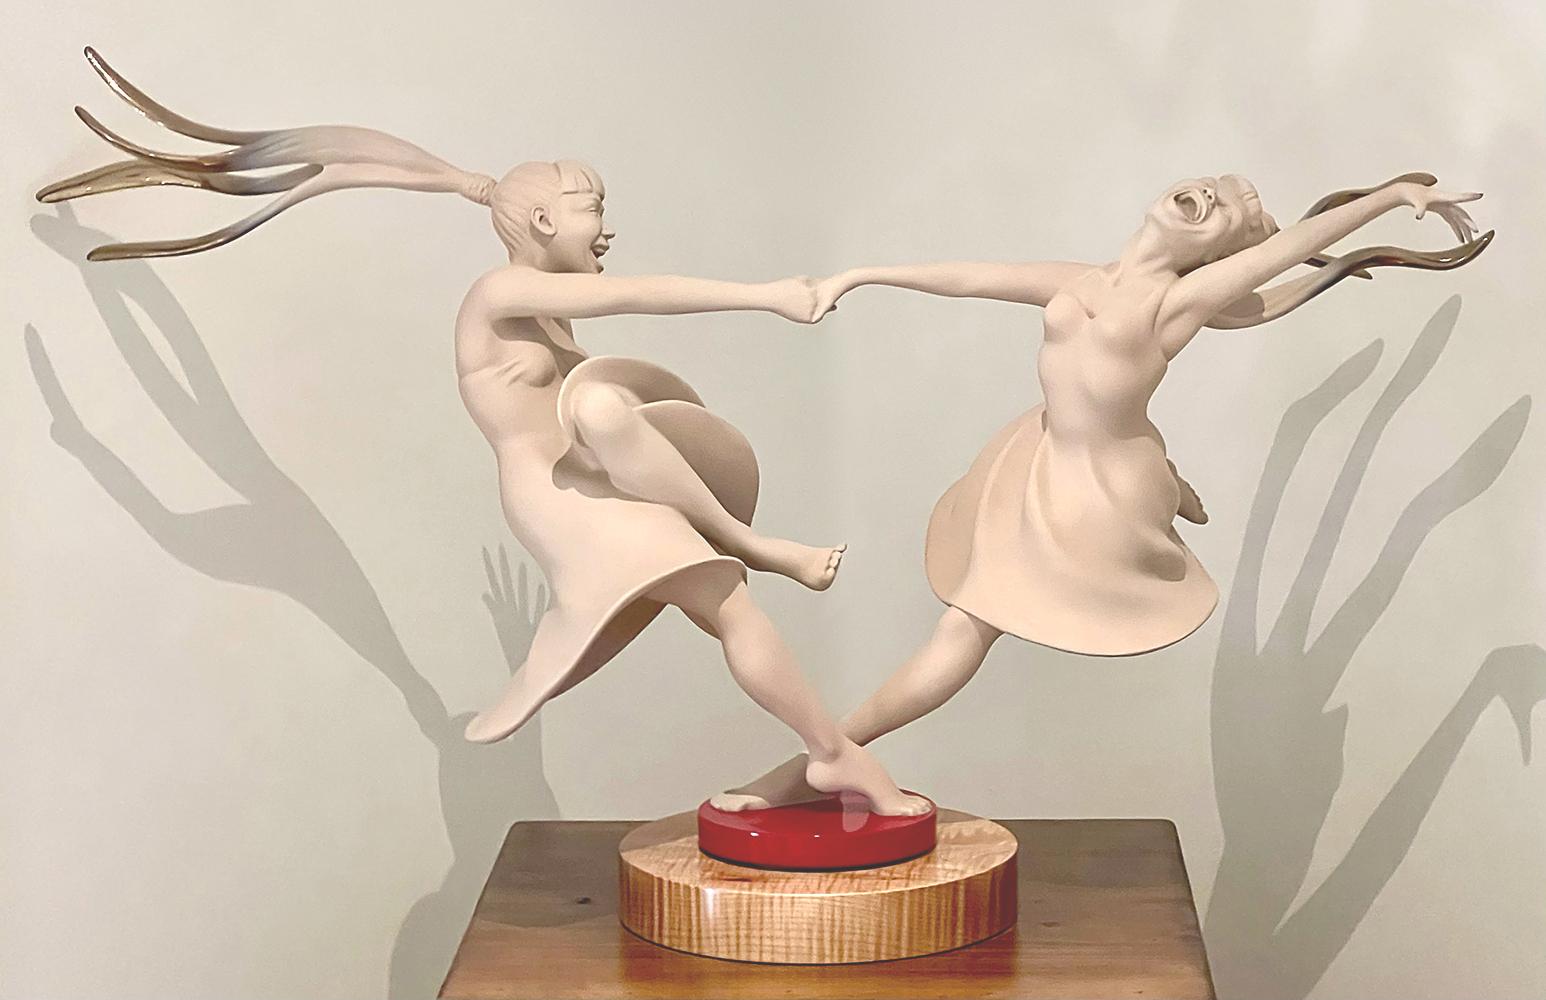 John Bennett Figurative Sculpture - "LA DOLCE VITA" THE SWEET LIFE BRONZE SCULPTURE